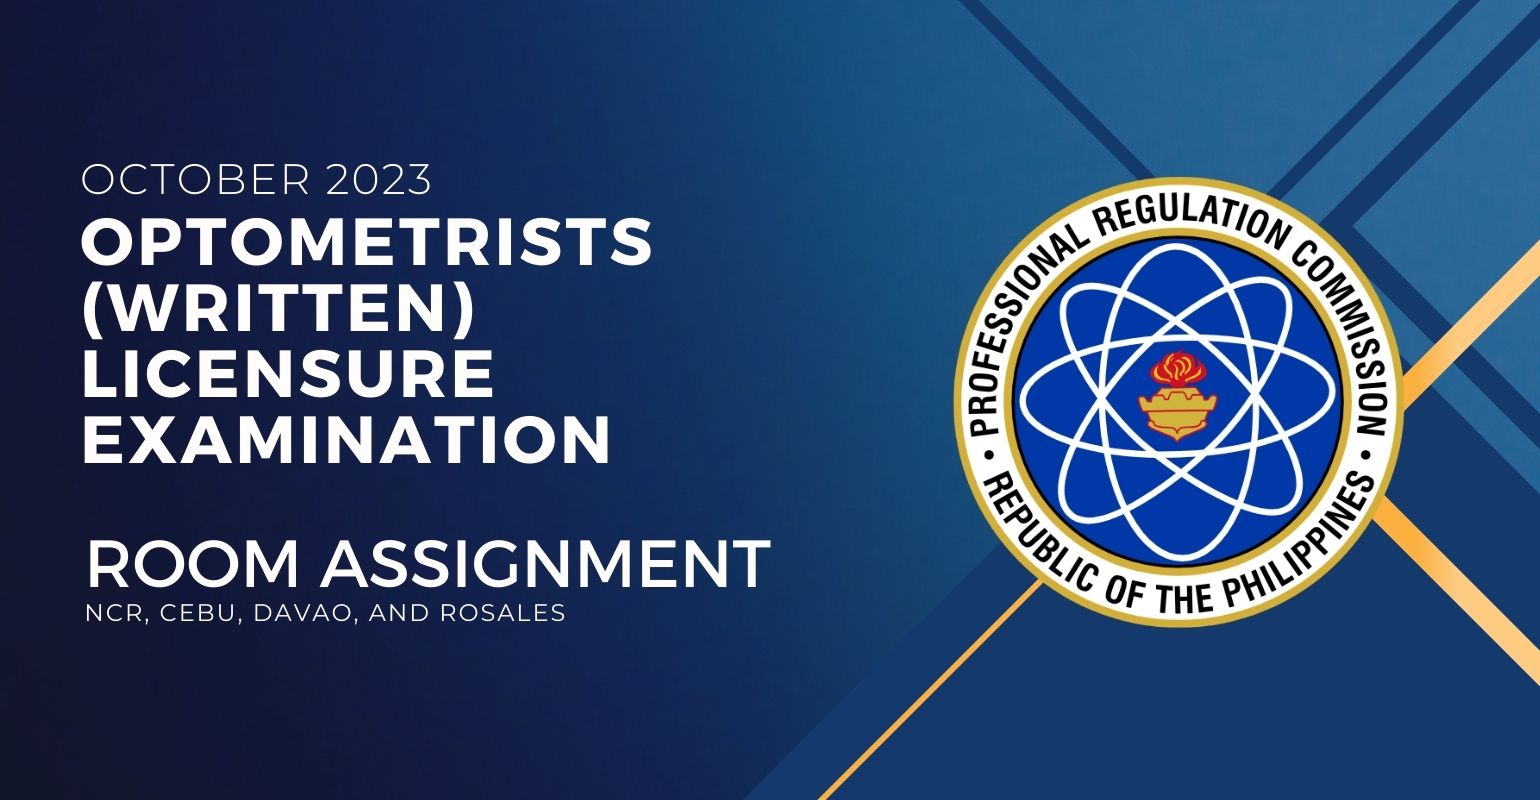 room assignment october 2023 optometrists written licensure exam